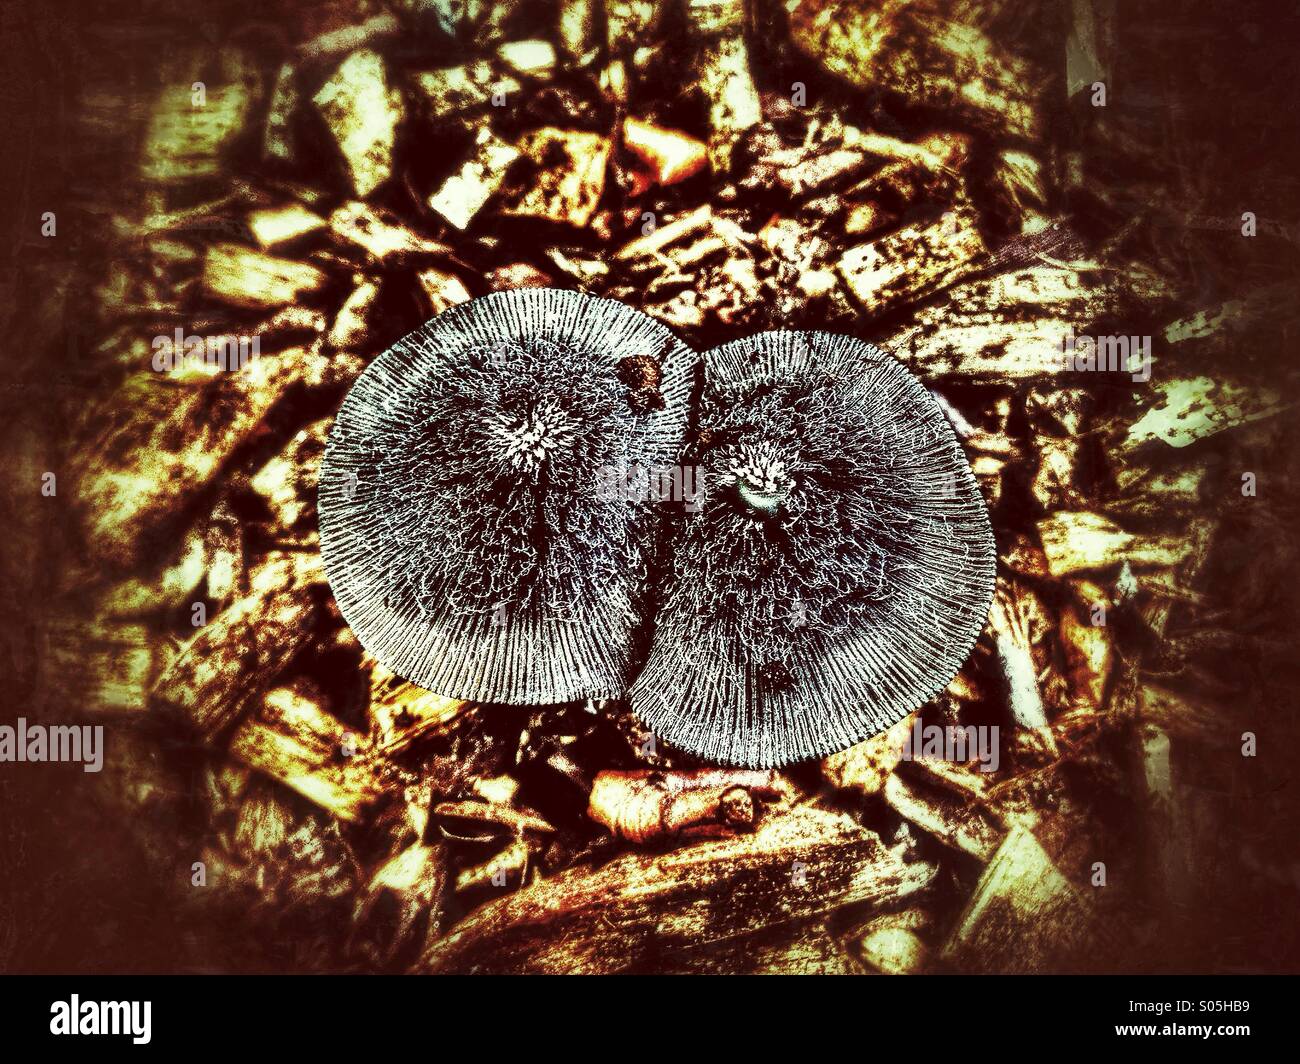 2 mushrooms growing linked together on wood bark Stock Photo